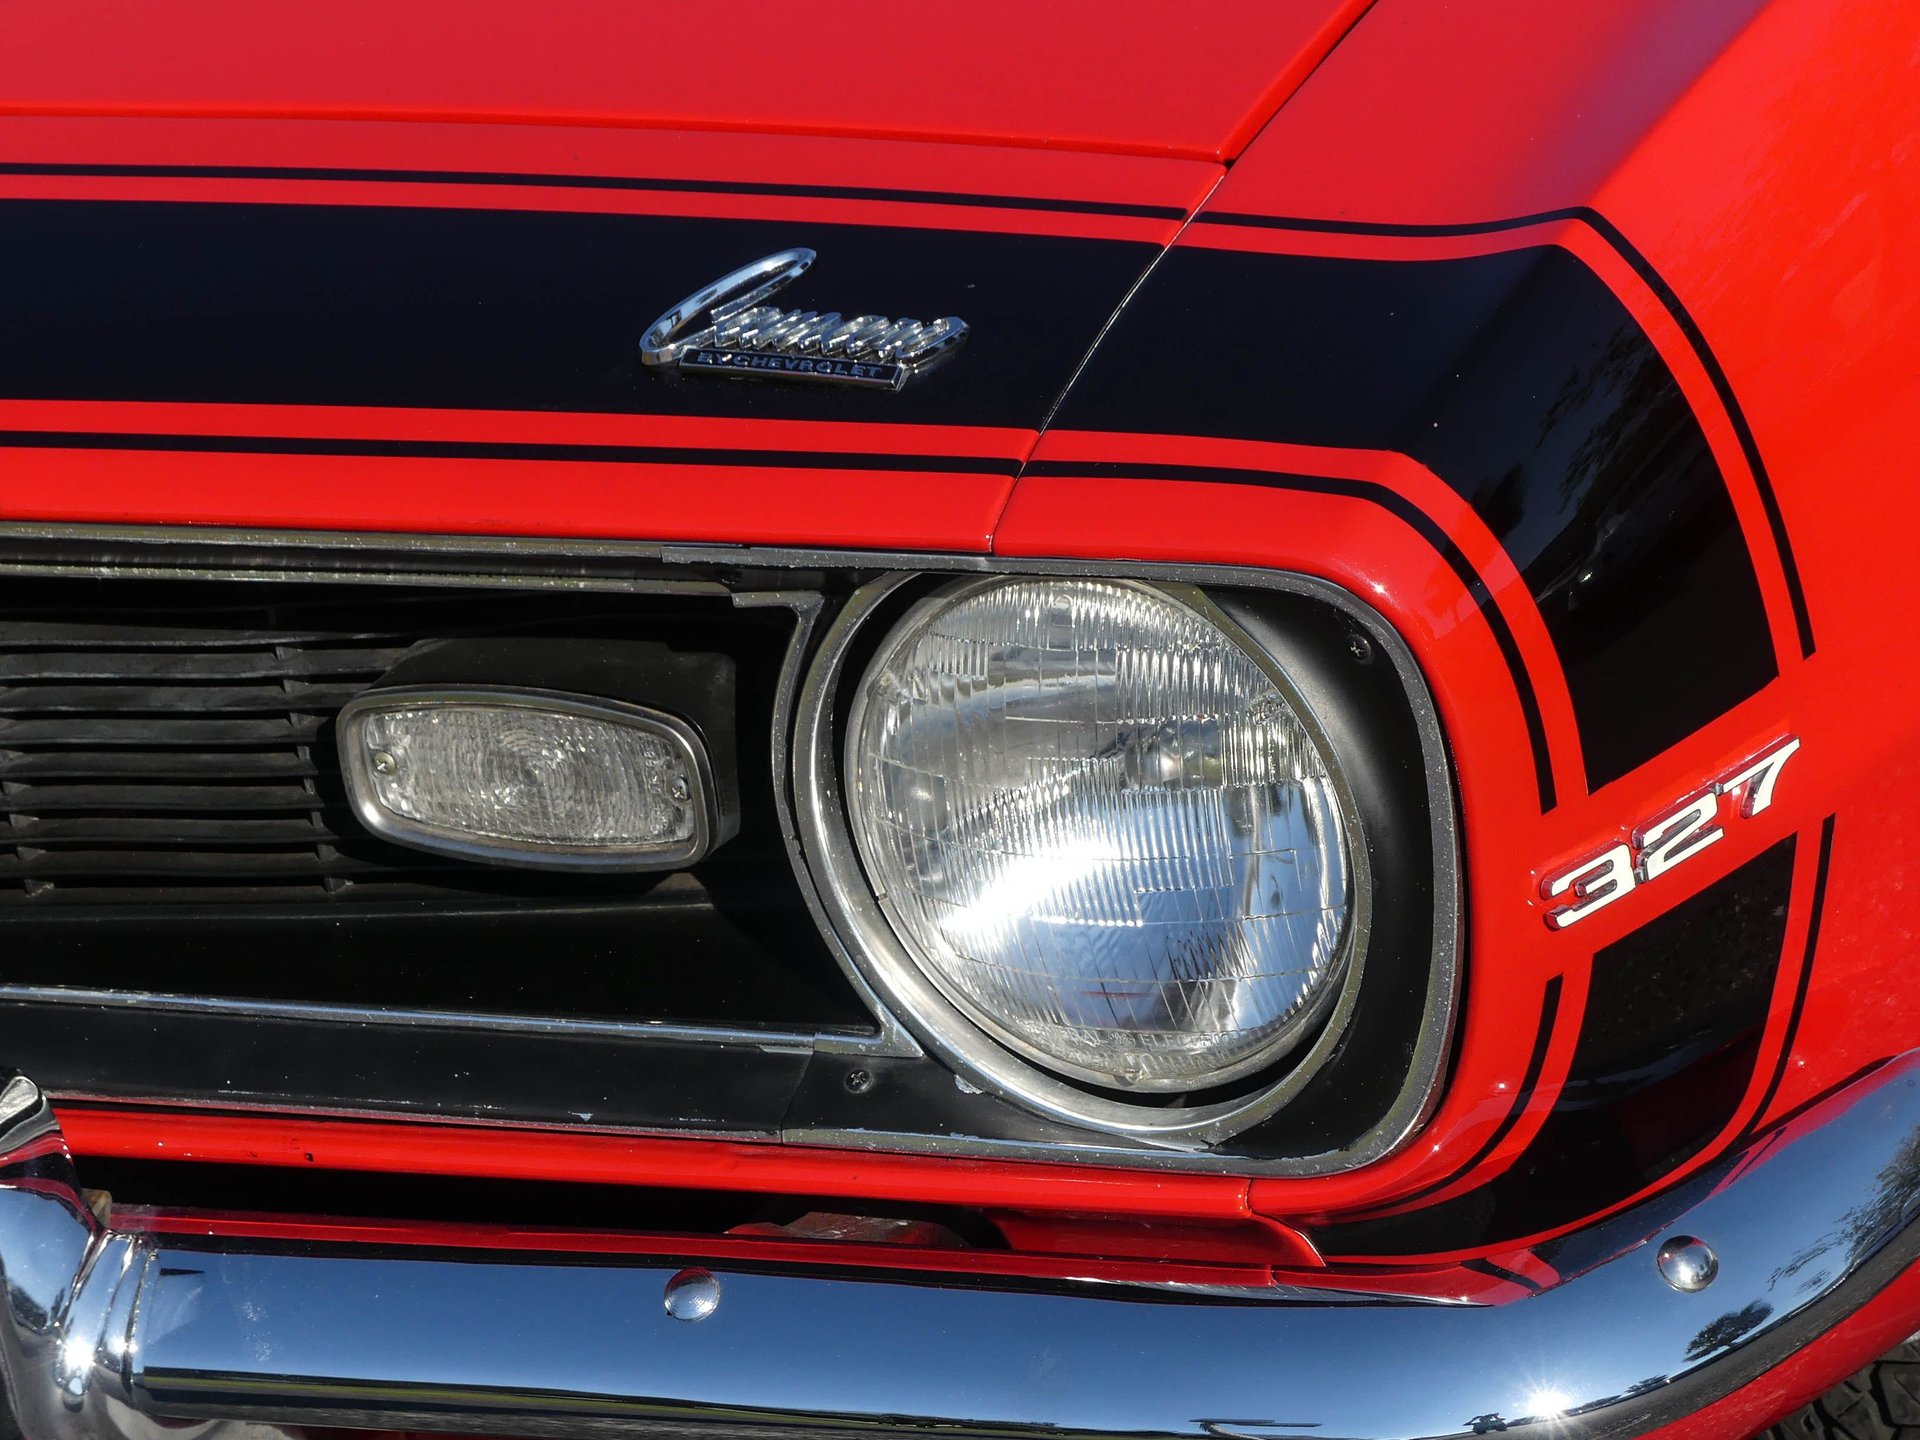 0794-TAMPA | 1968 Chevrolet Camaro Convertible | Survivor Classic Cars Services